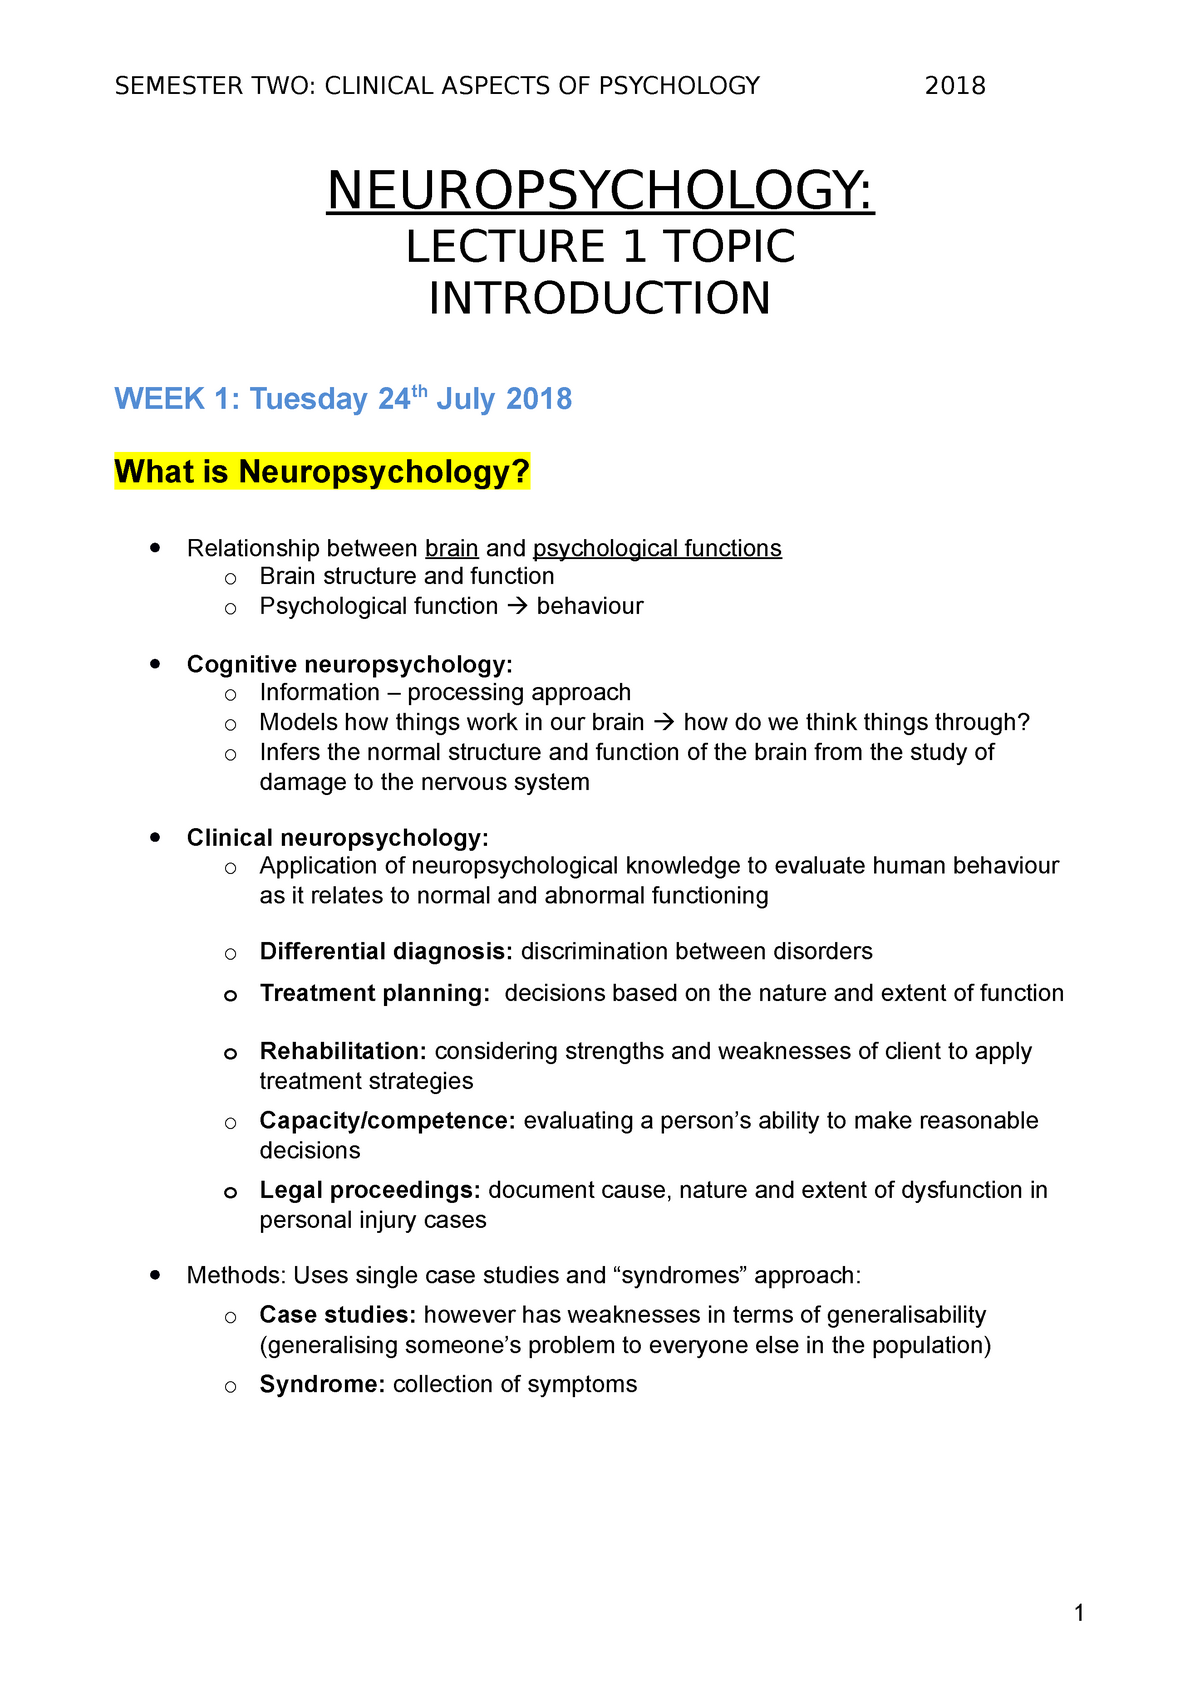 dissertation topics for neuropsychology